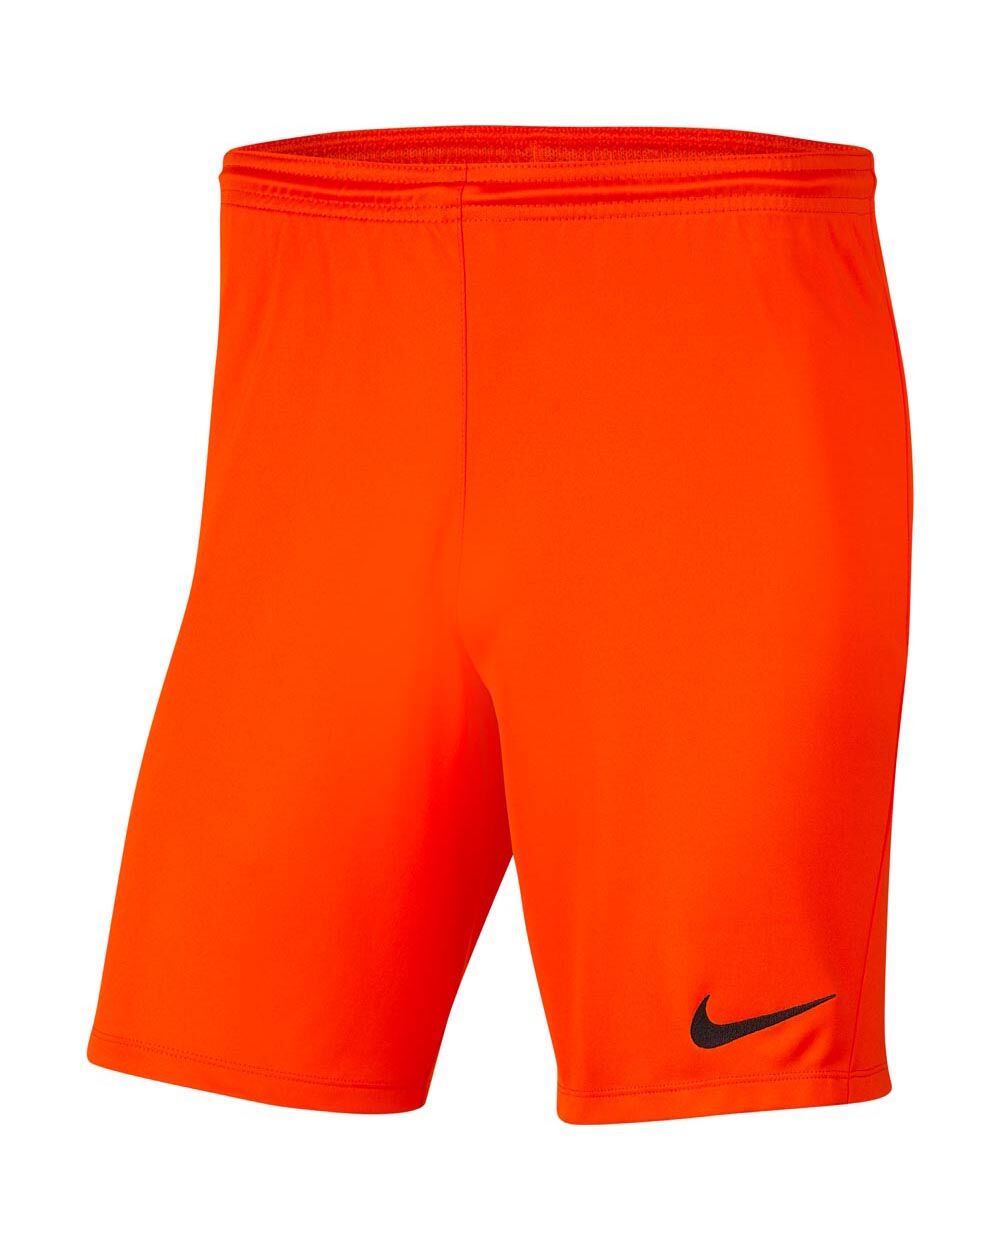 Pantalón corto Nike Park III Naranja para Hombre - BV6855-819